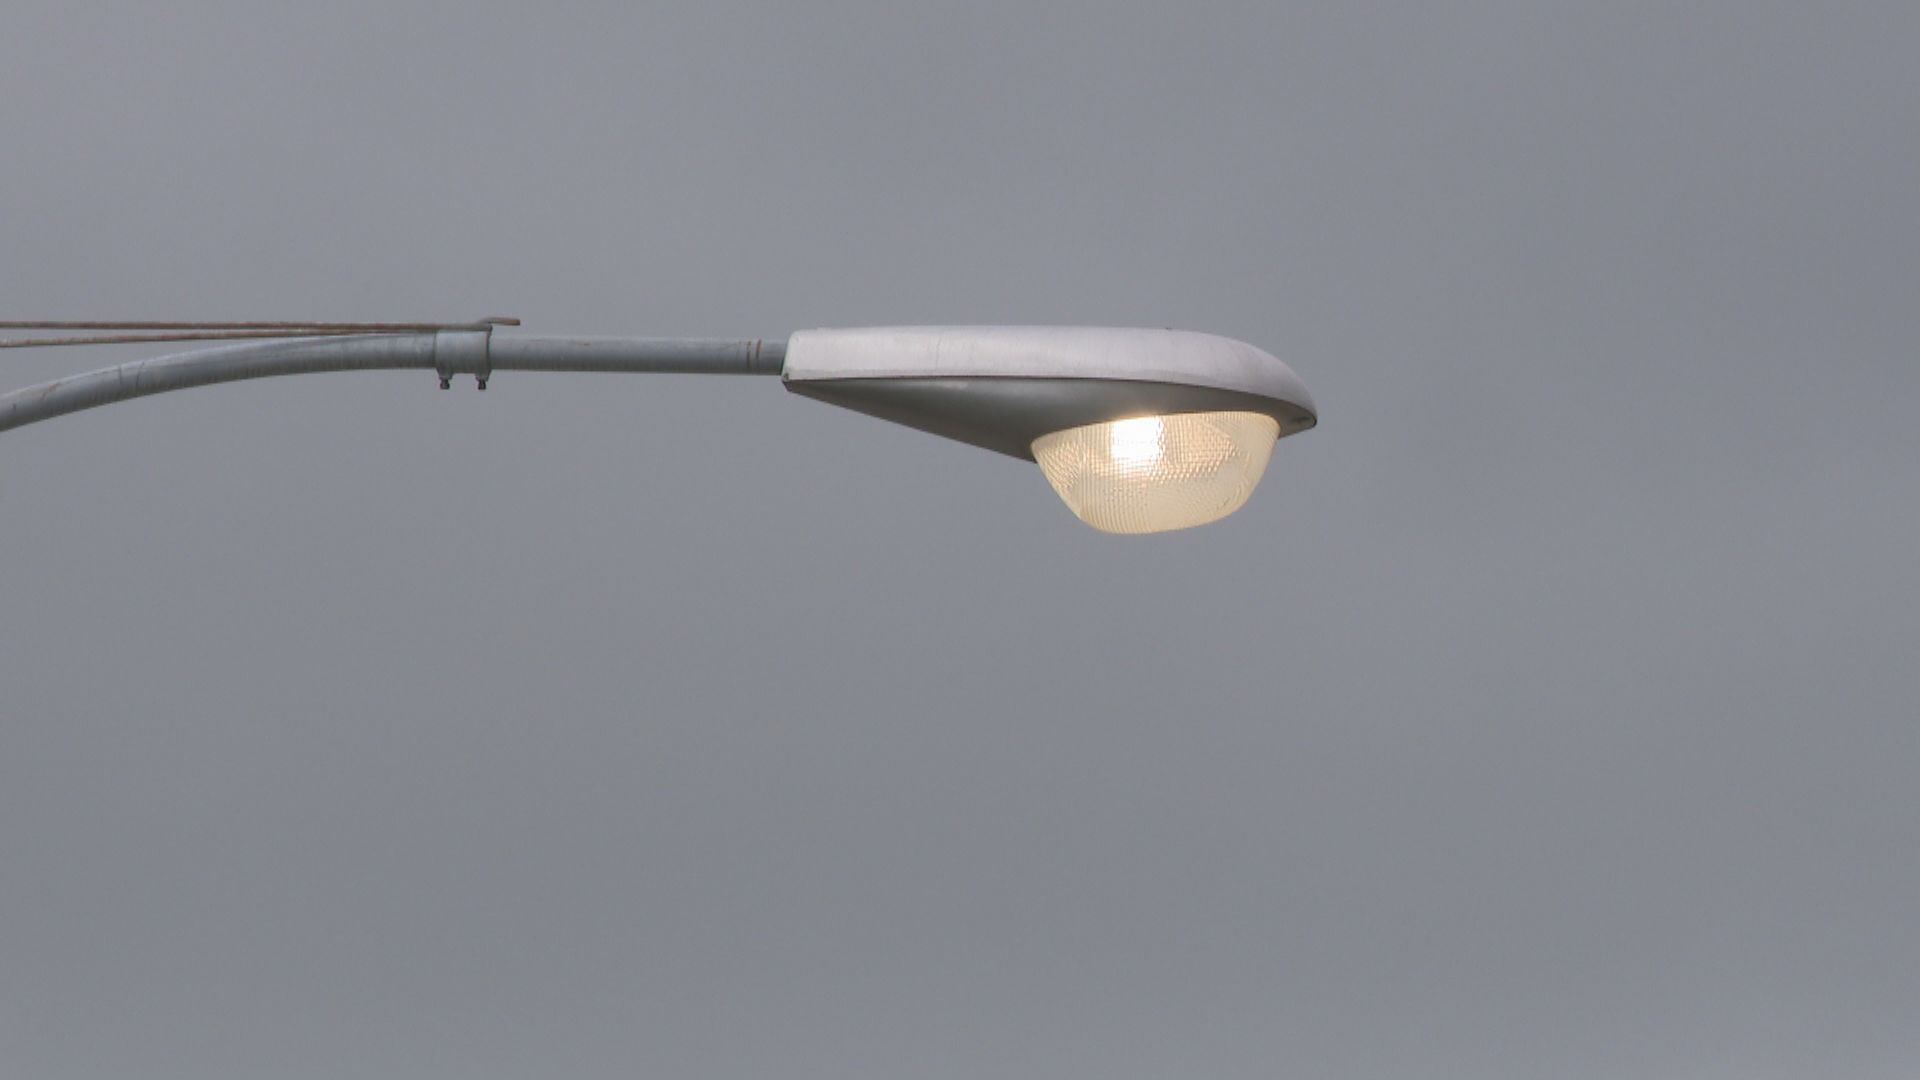 City of Calgary flips a switch on tardy repairs to streetlights